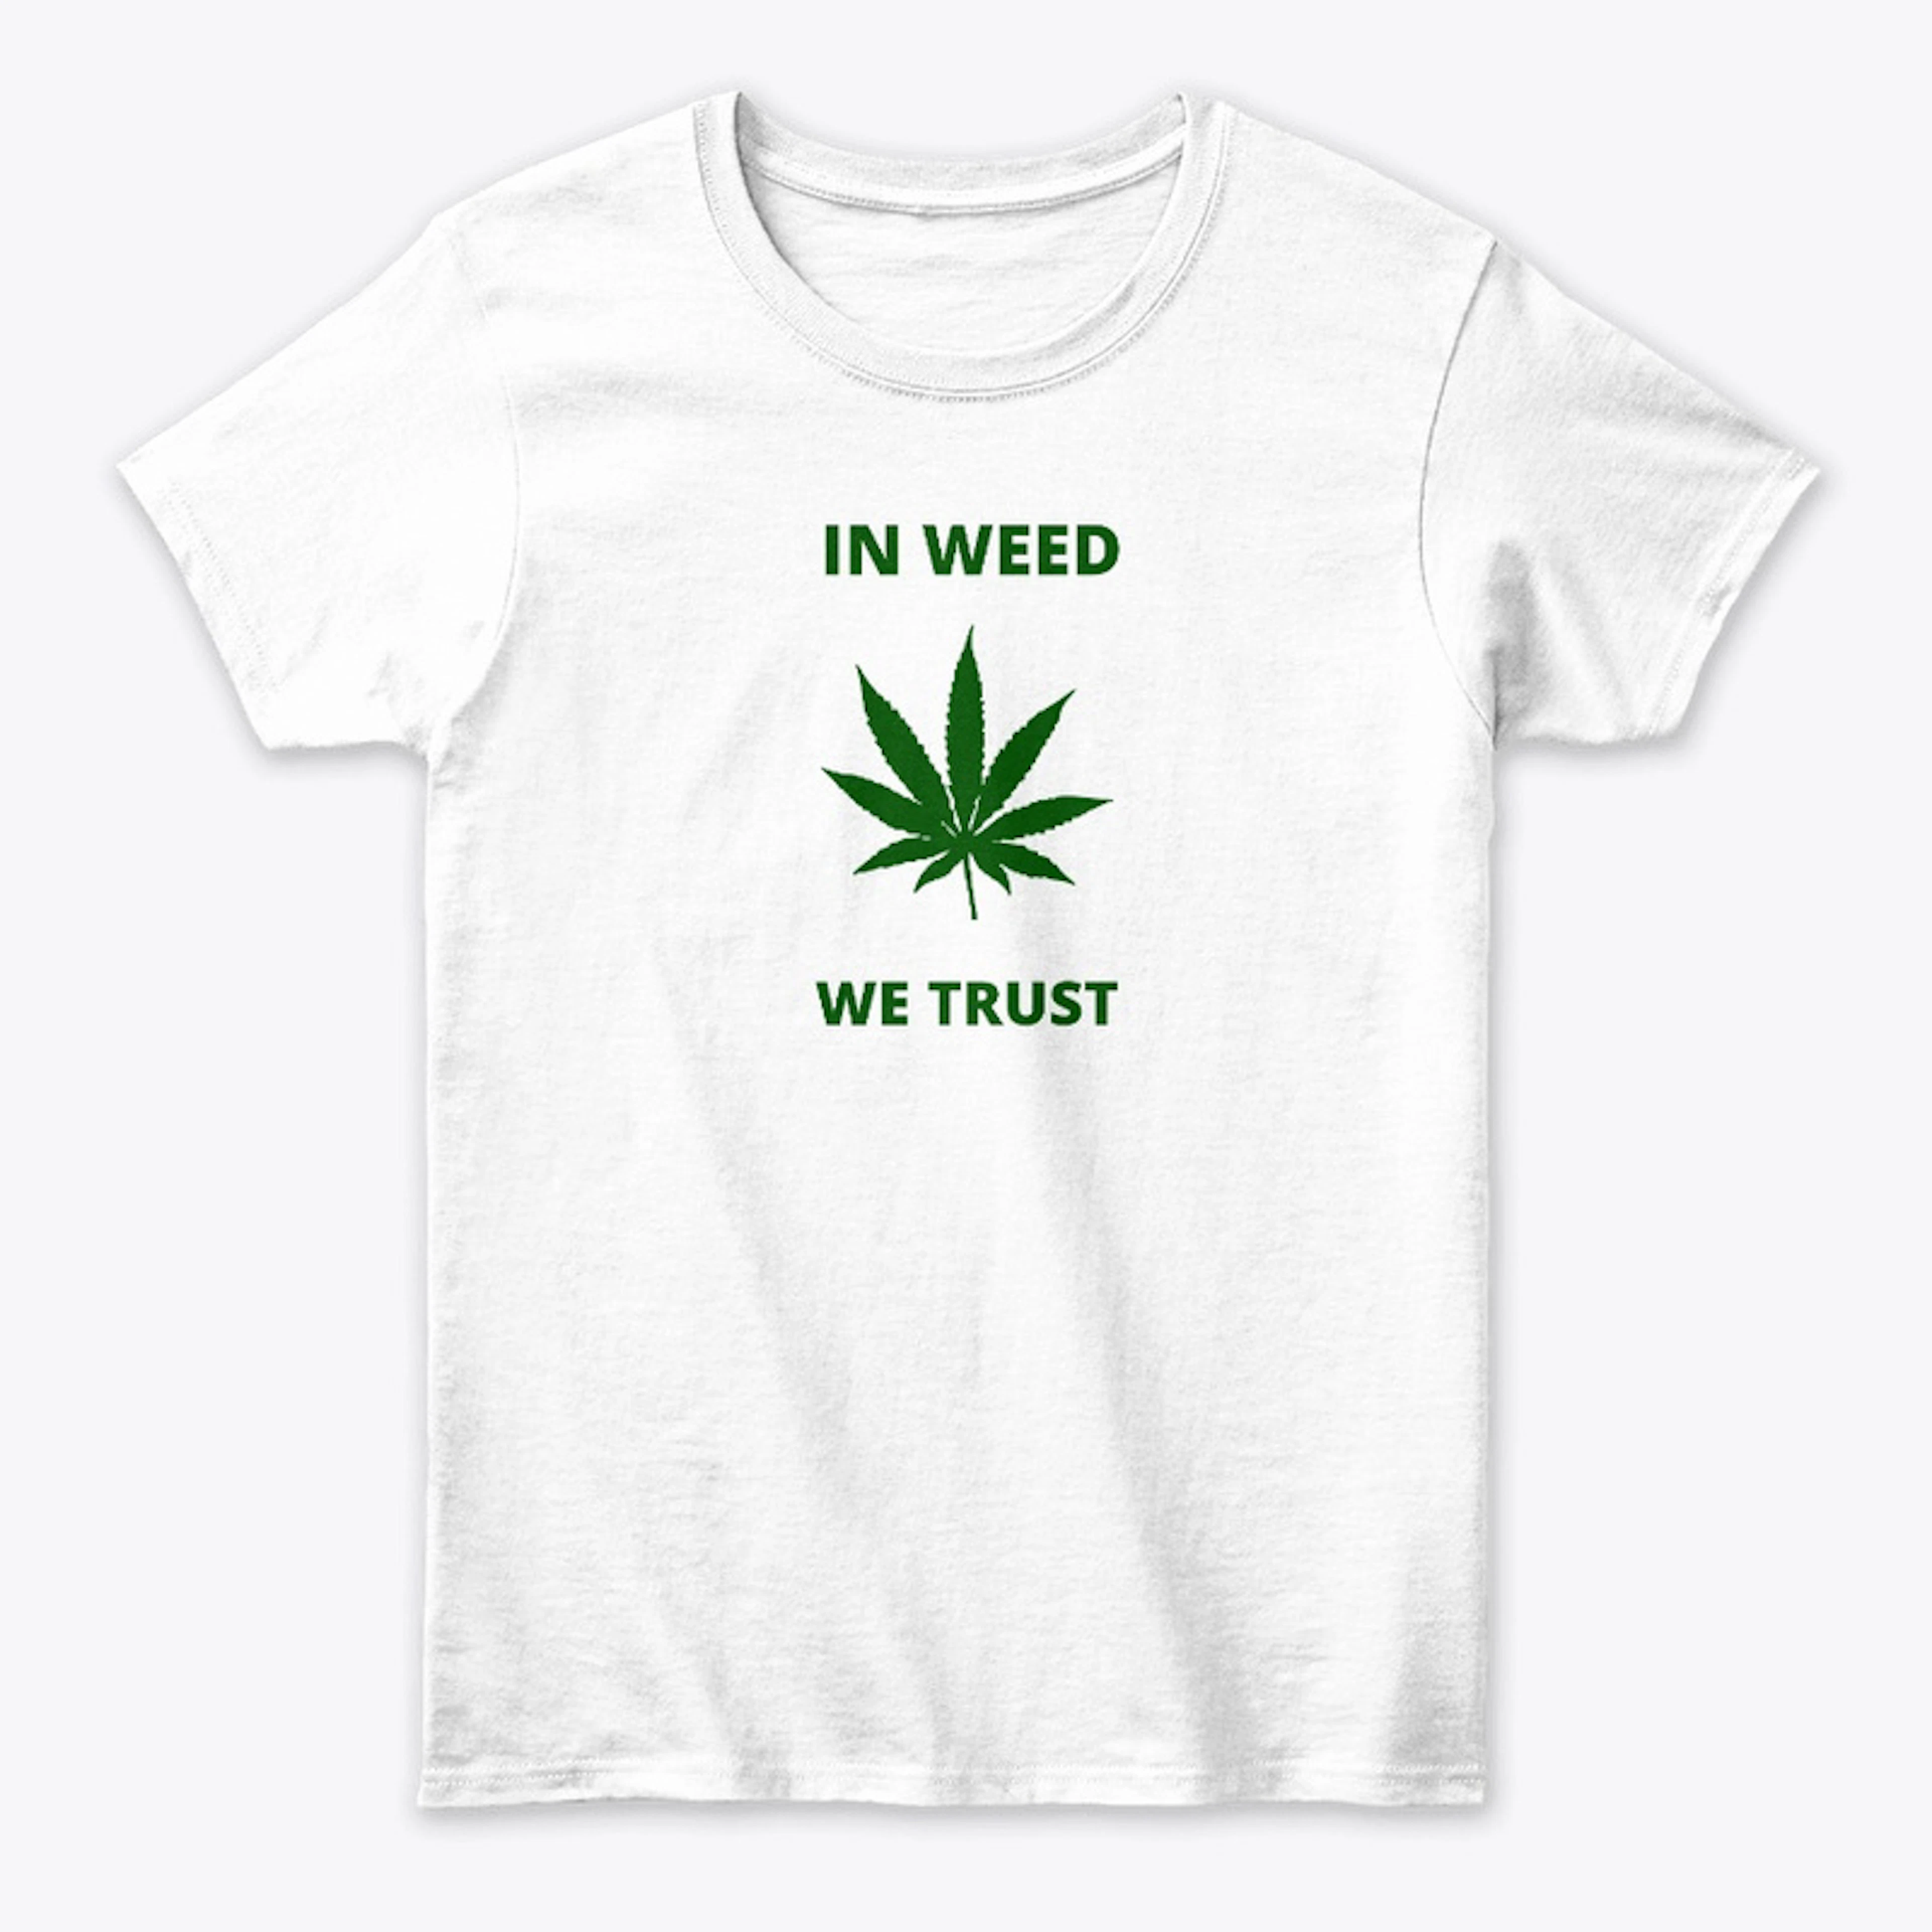 In weed we trust